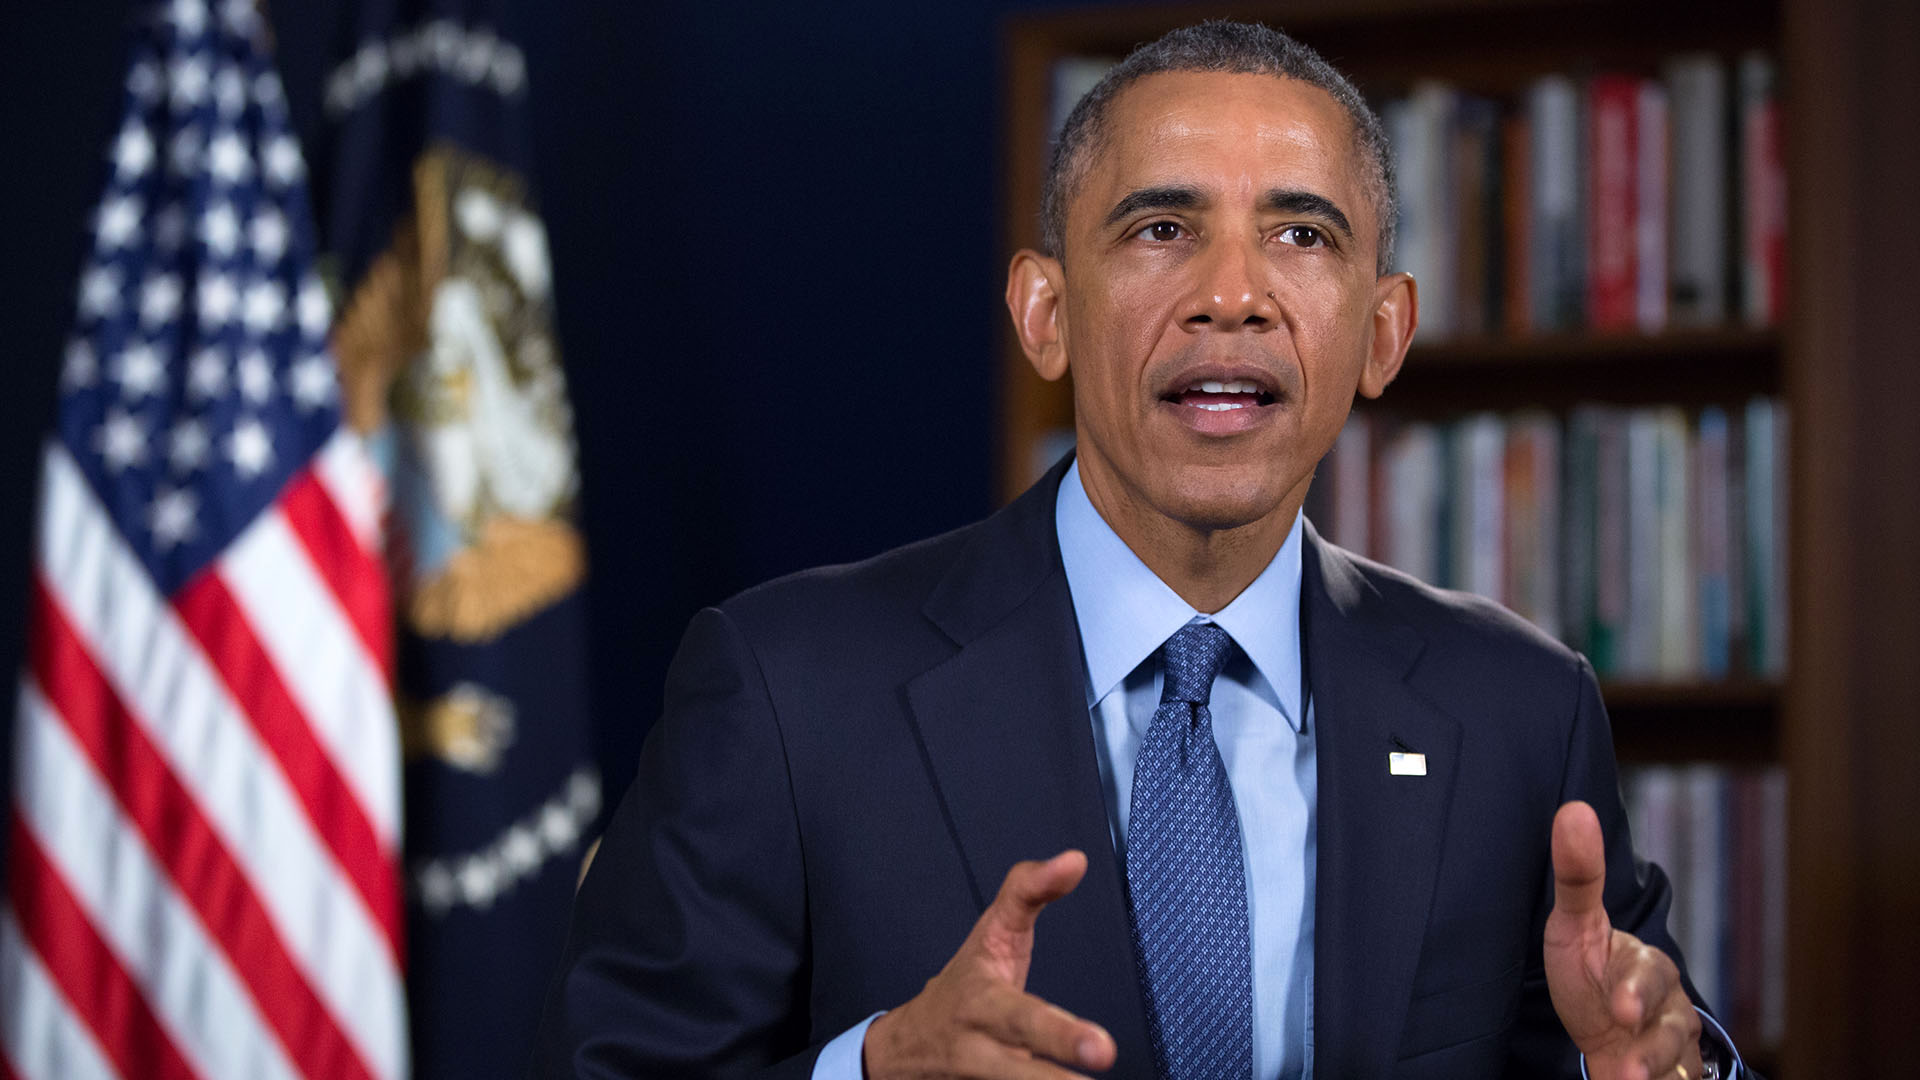 President Obama tapes the Weekly Address at the University of Kansas, Jan. 22, 2015